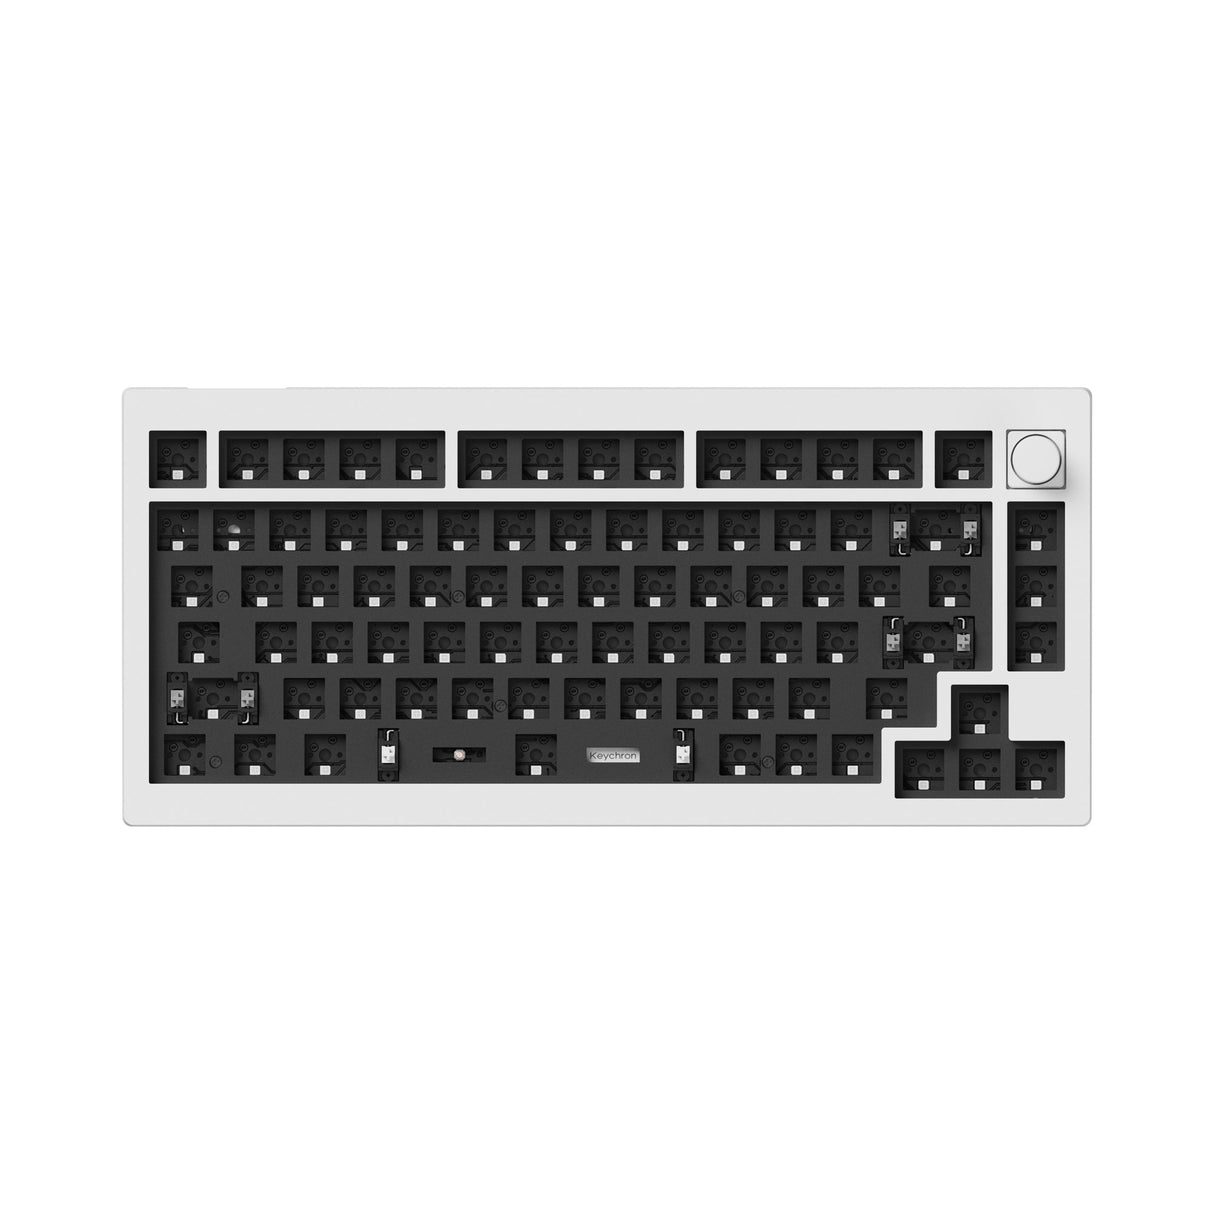 Keychron V1 QMK VIA custom mechanical keyboard 75% layout shell white for Mac Window Linux barebone knob